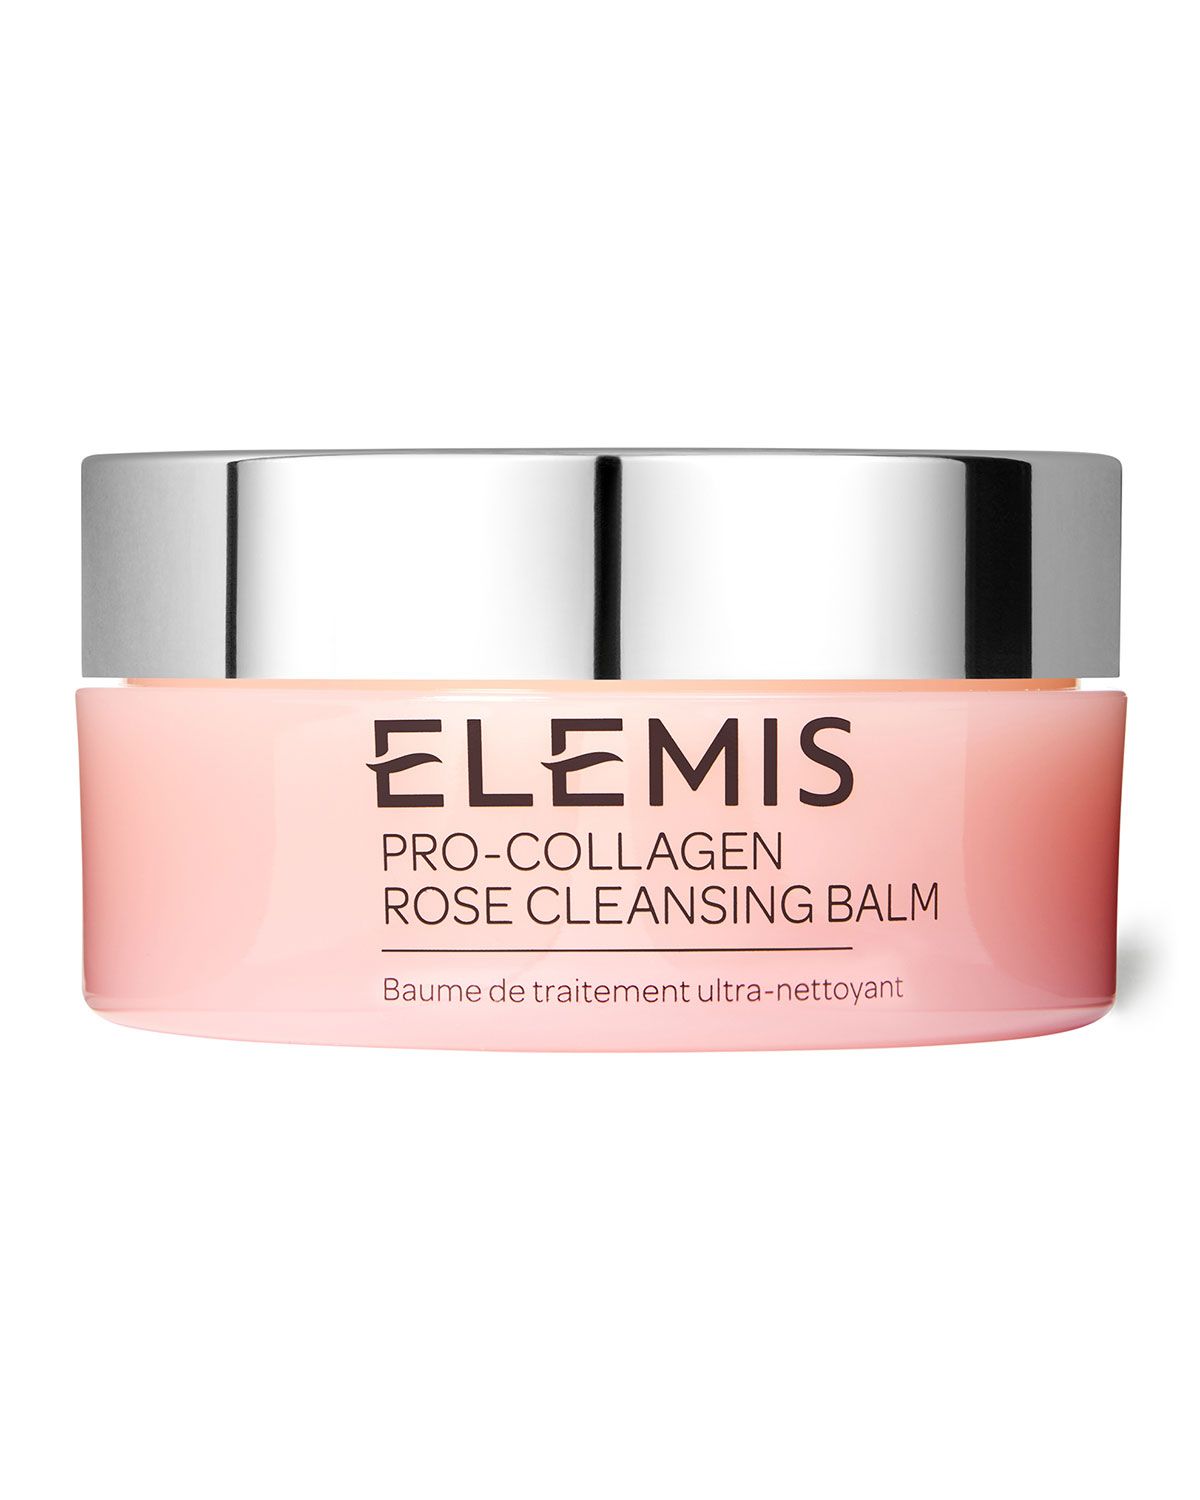 Pro-Collagen Rose Cleansing Balm | Neiman Marcus